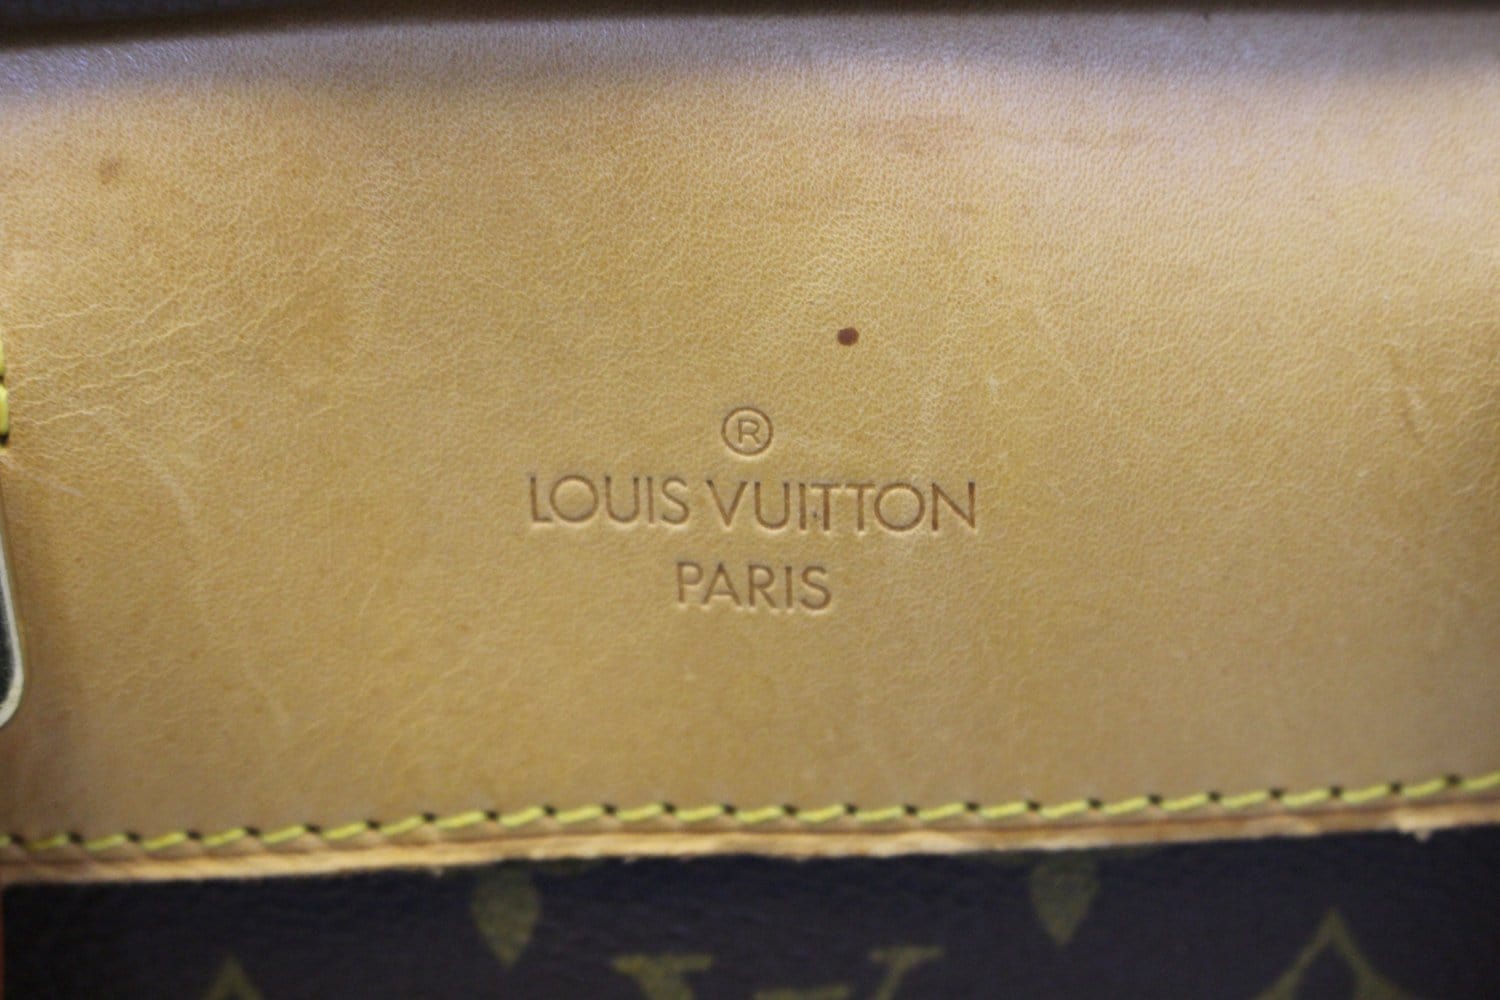 Mala Louis Vuitton Alize 3 Poches Monograma - Inffino, Brechó de Luxo  Online